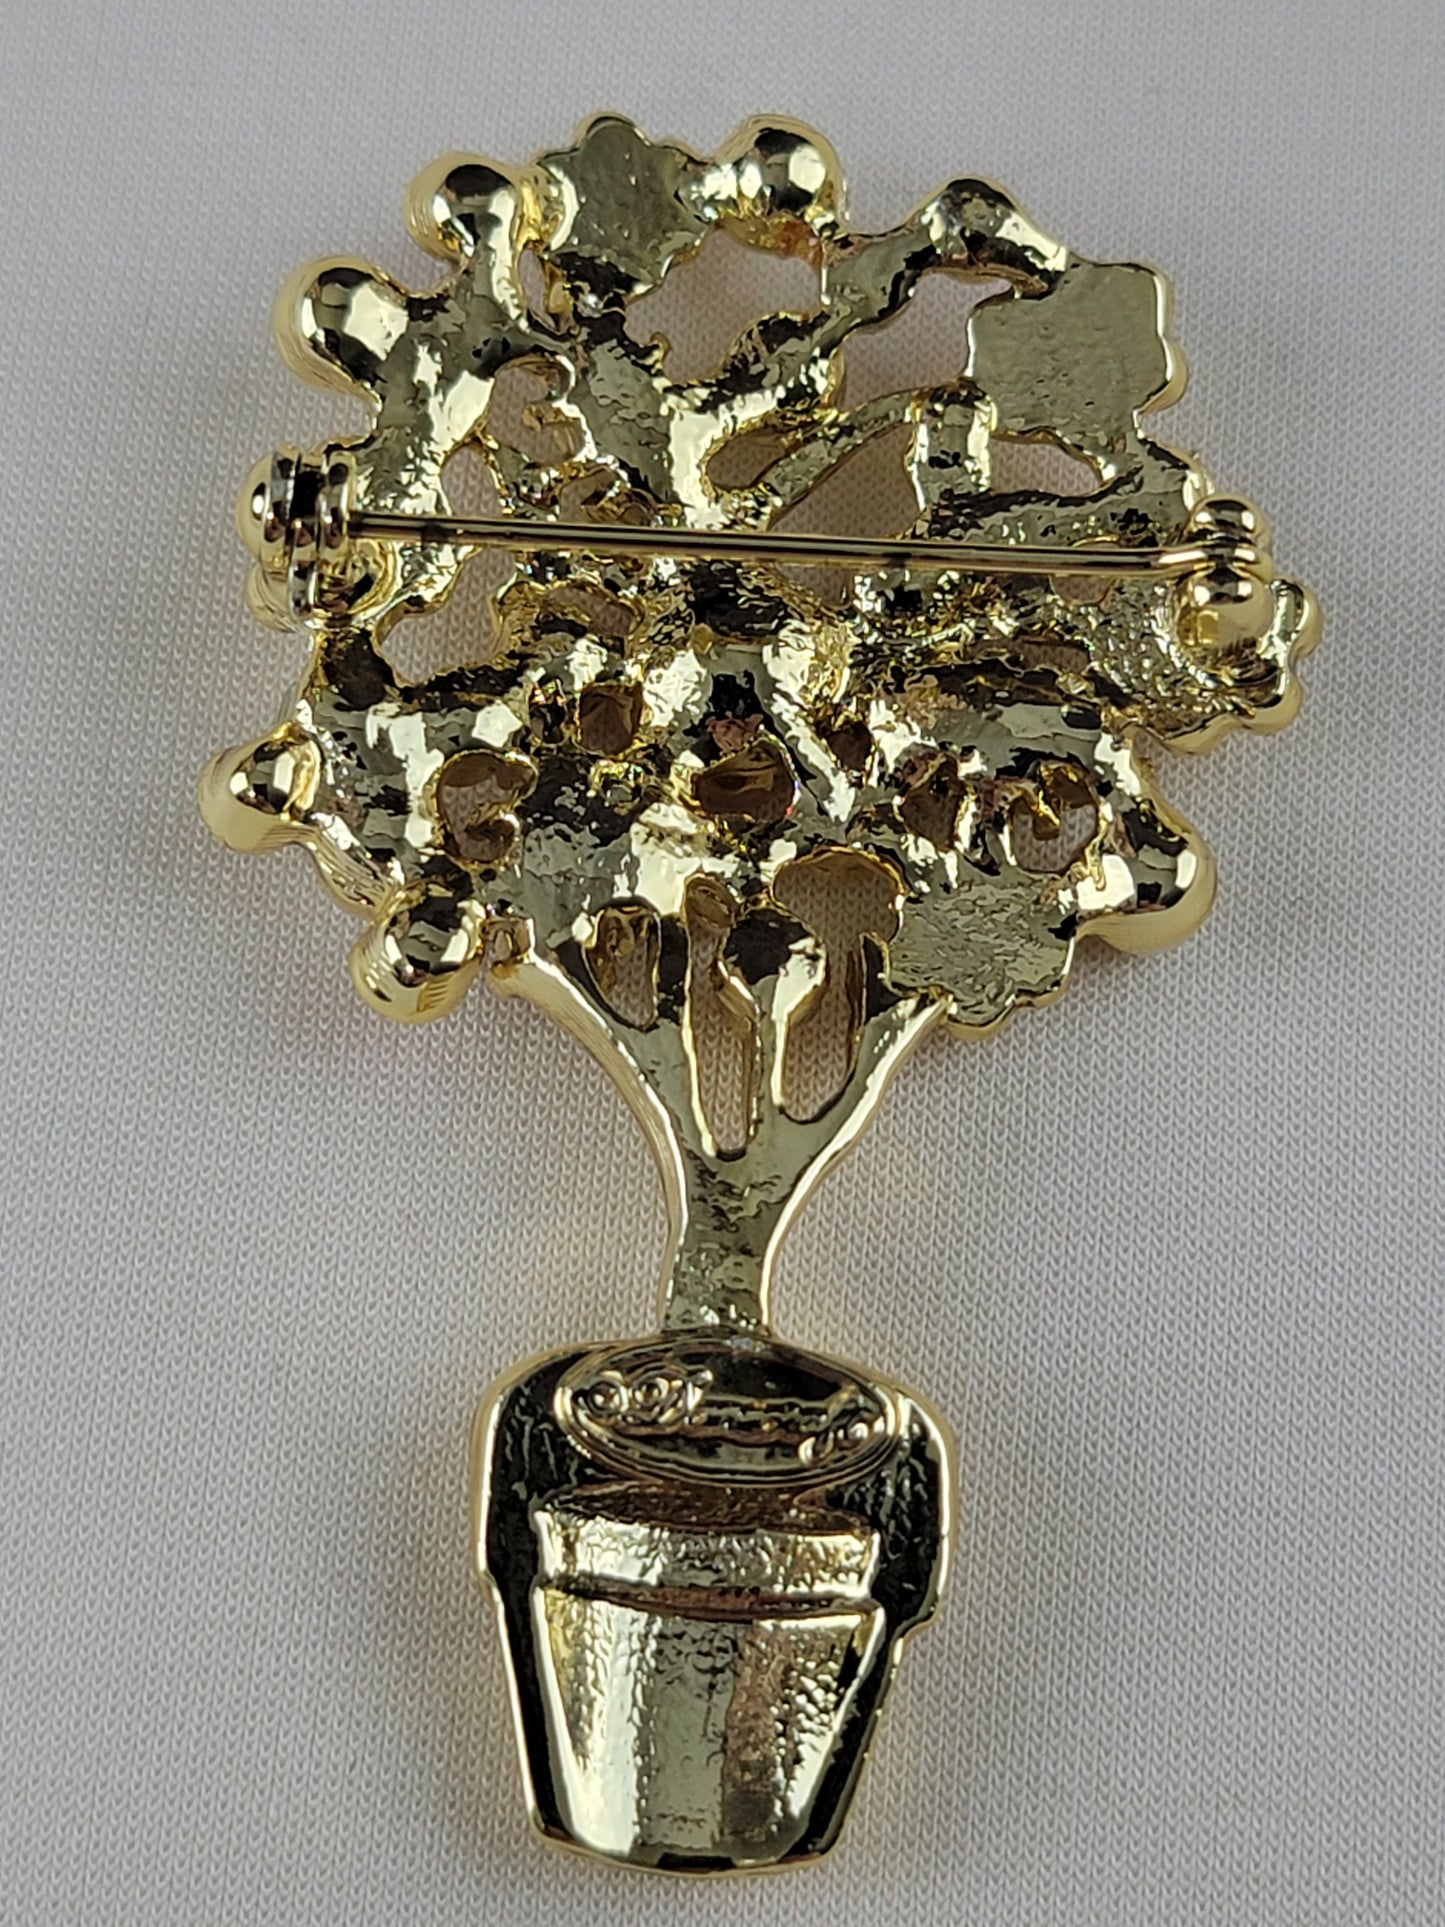 Danecraft Shiny Gold Tone Faux Pearl Pink Rhinestone Flower Pot Brooch Pin